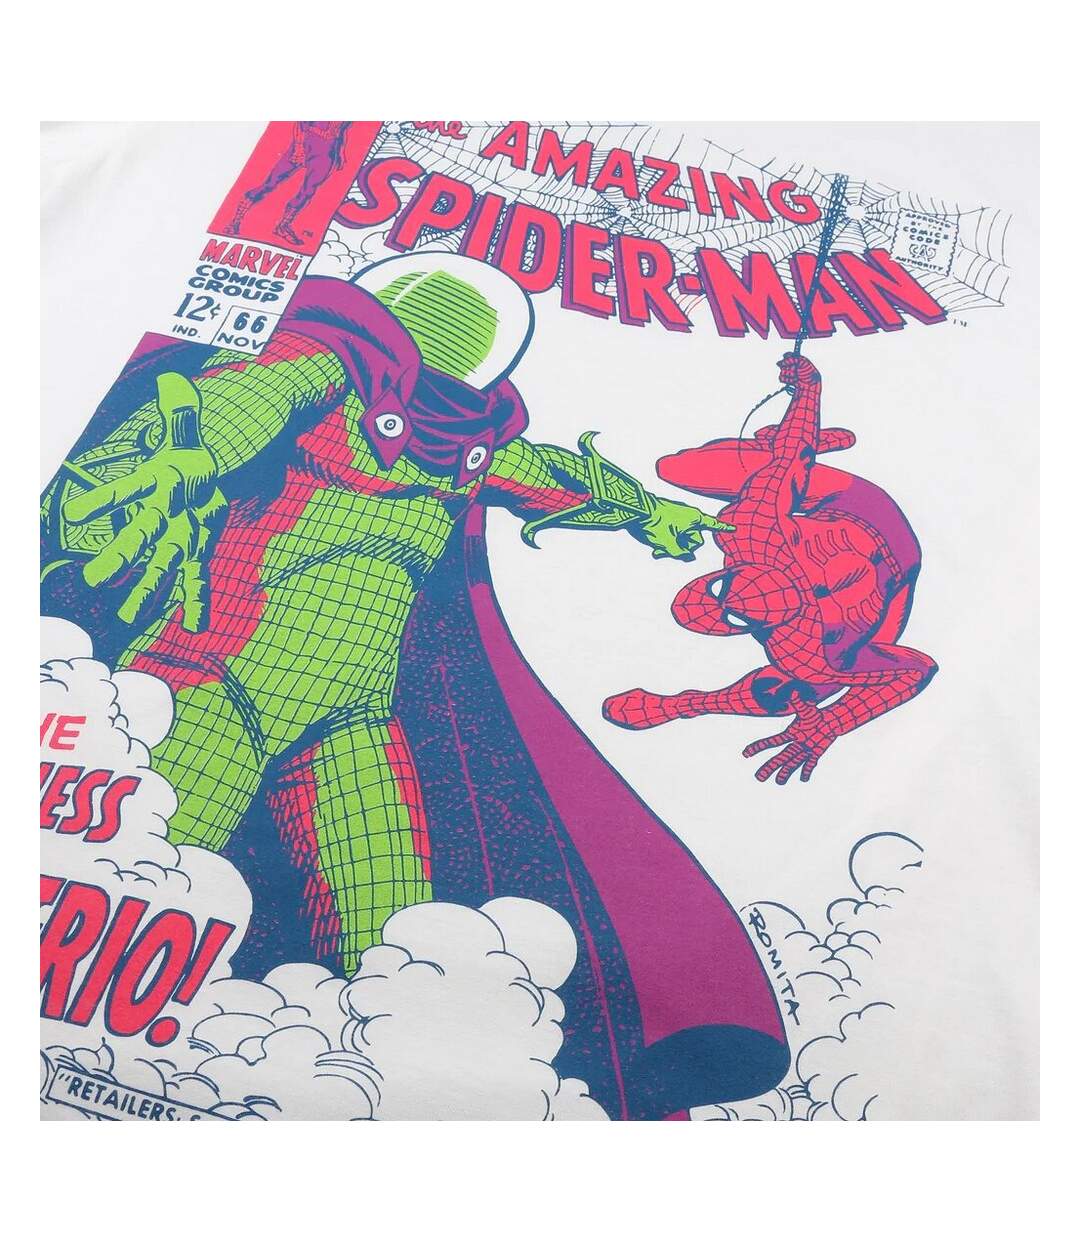 Marvel Comics T-shirt Mens Spiderman Madness (Blanc / Rose / Vert) - UTTV517